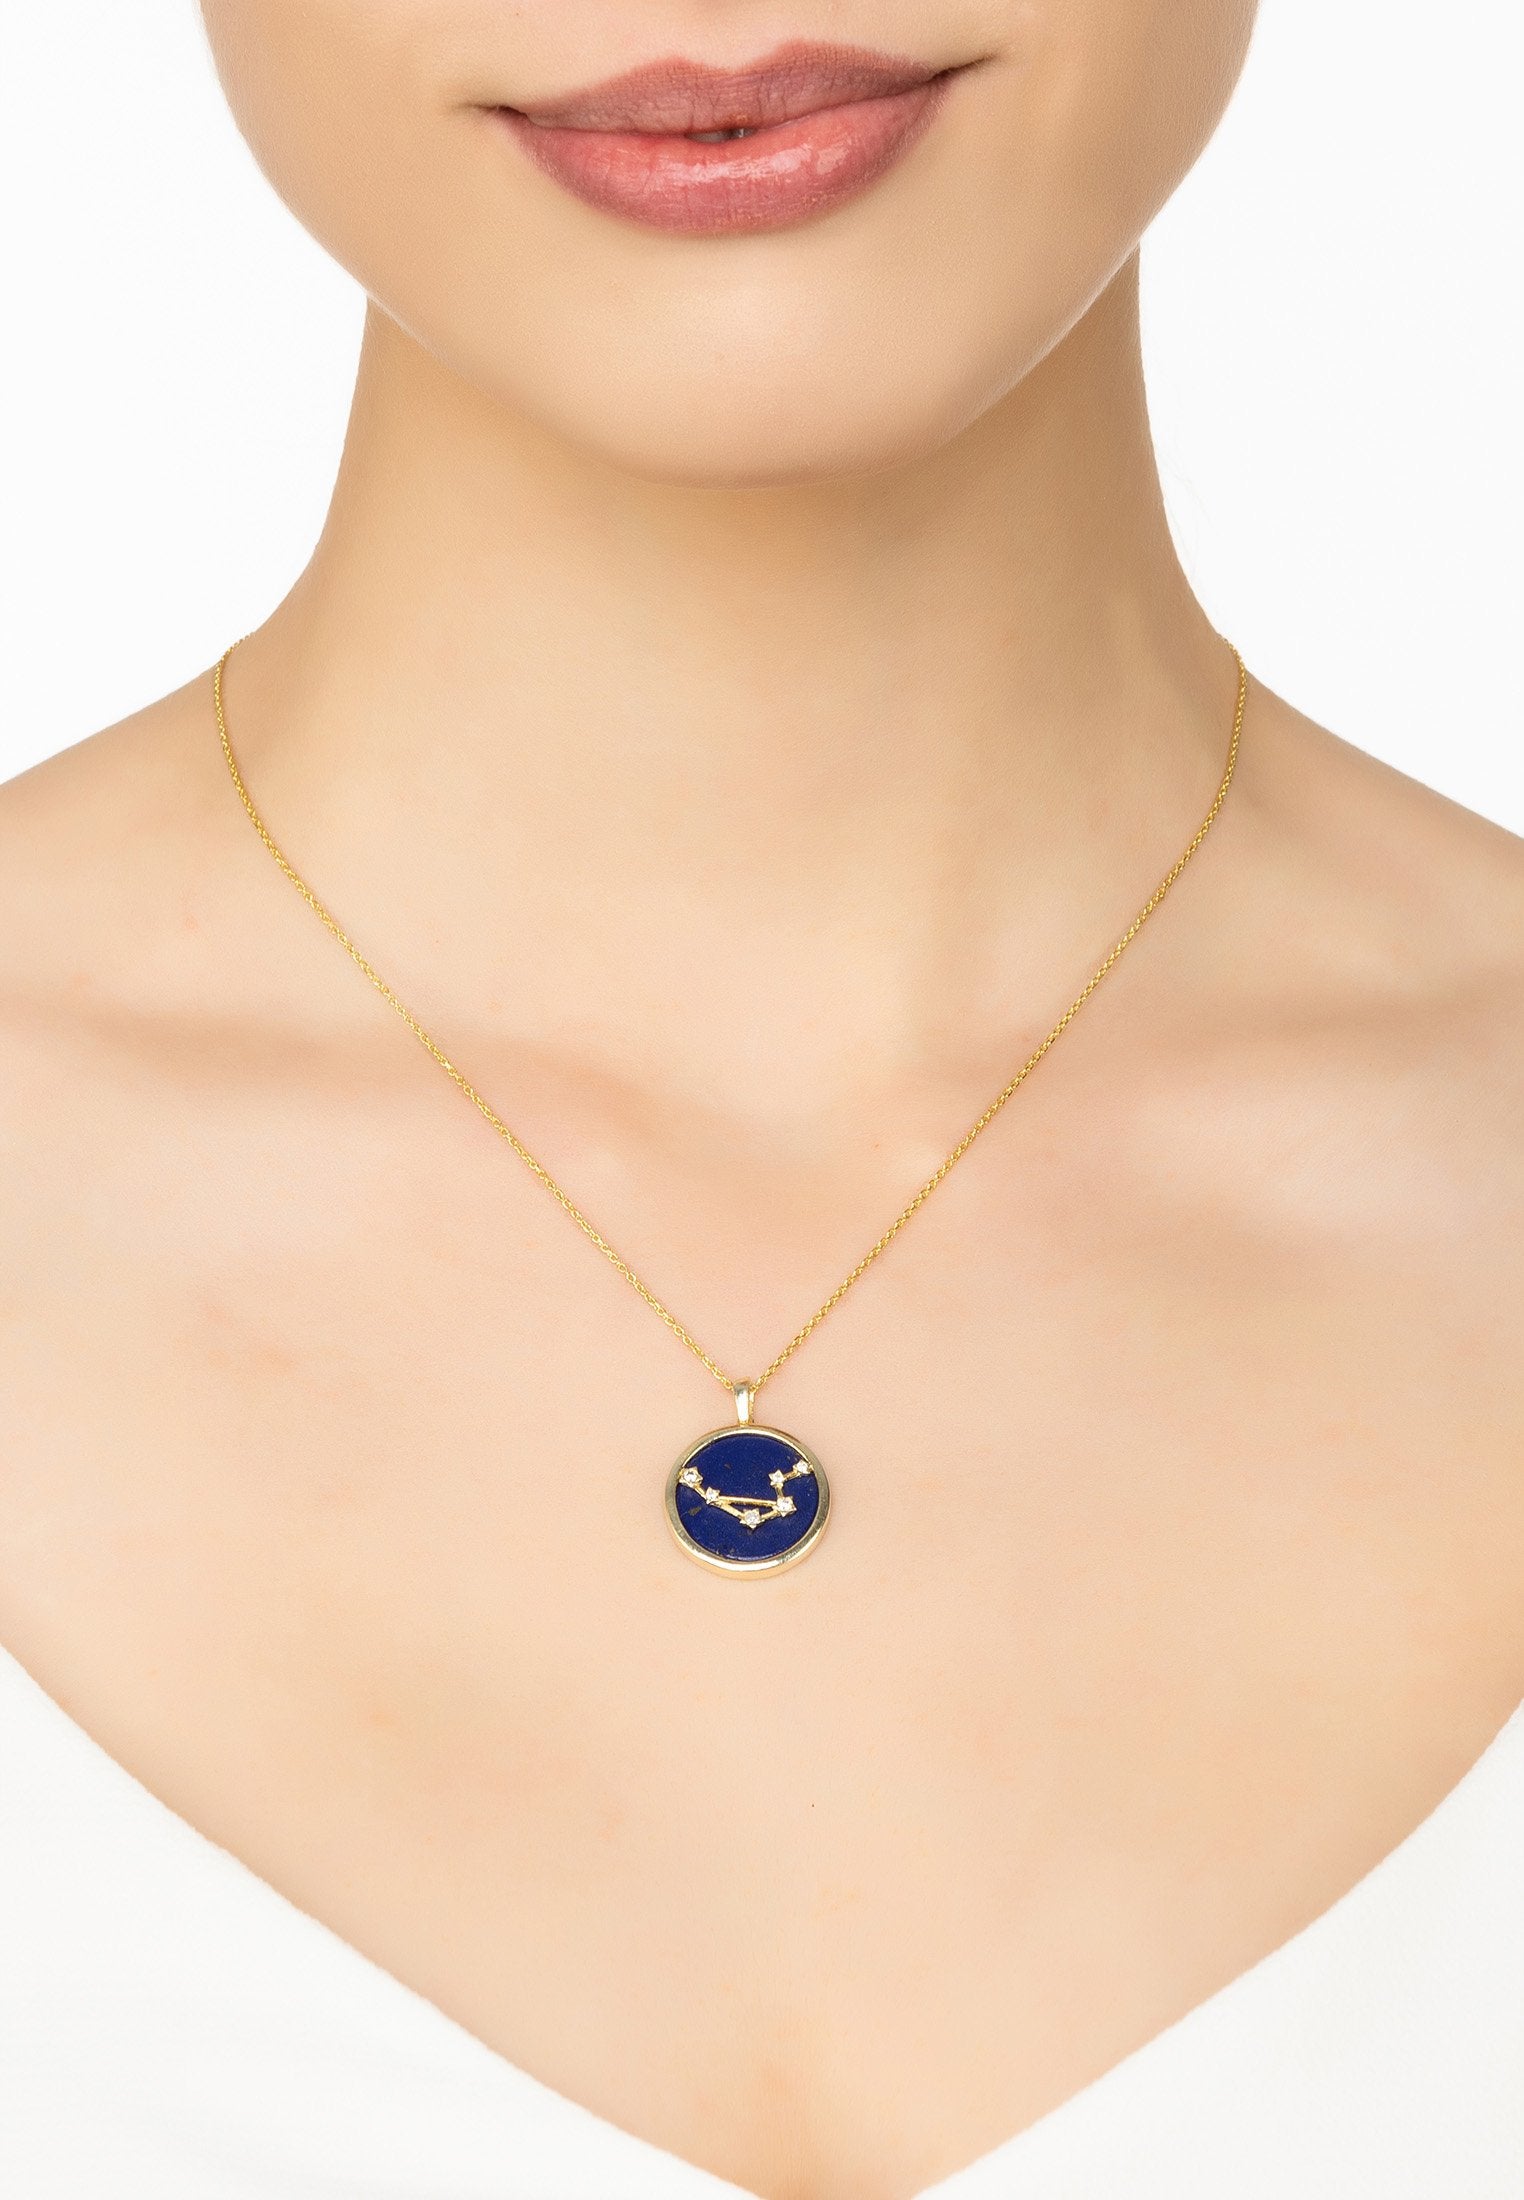 Personalized Necklaces - Zodiac Lapis Lazuli Star Constellation Pendant Necklace Gold Libra 